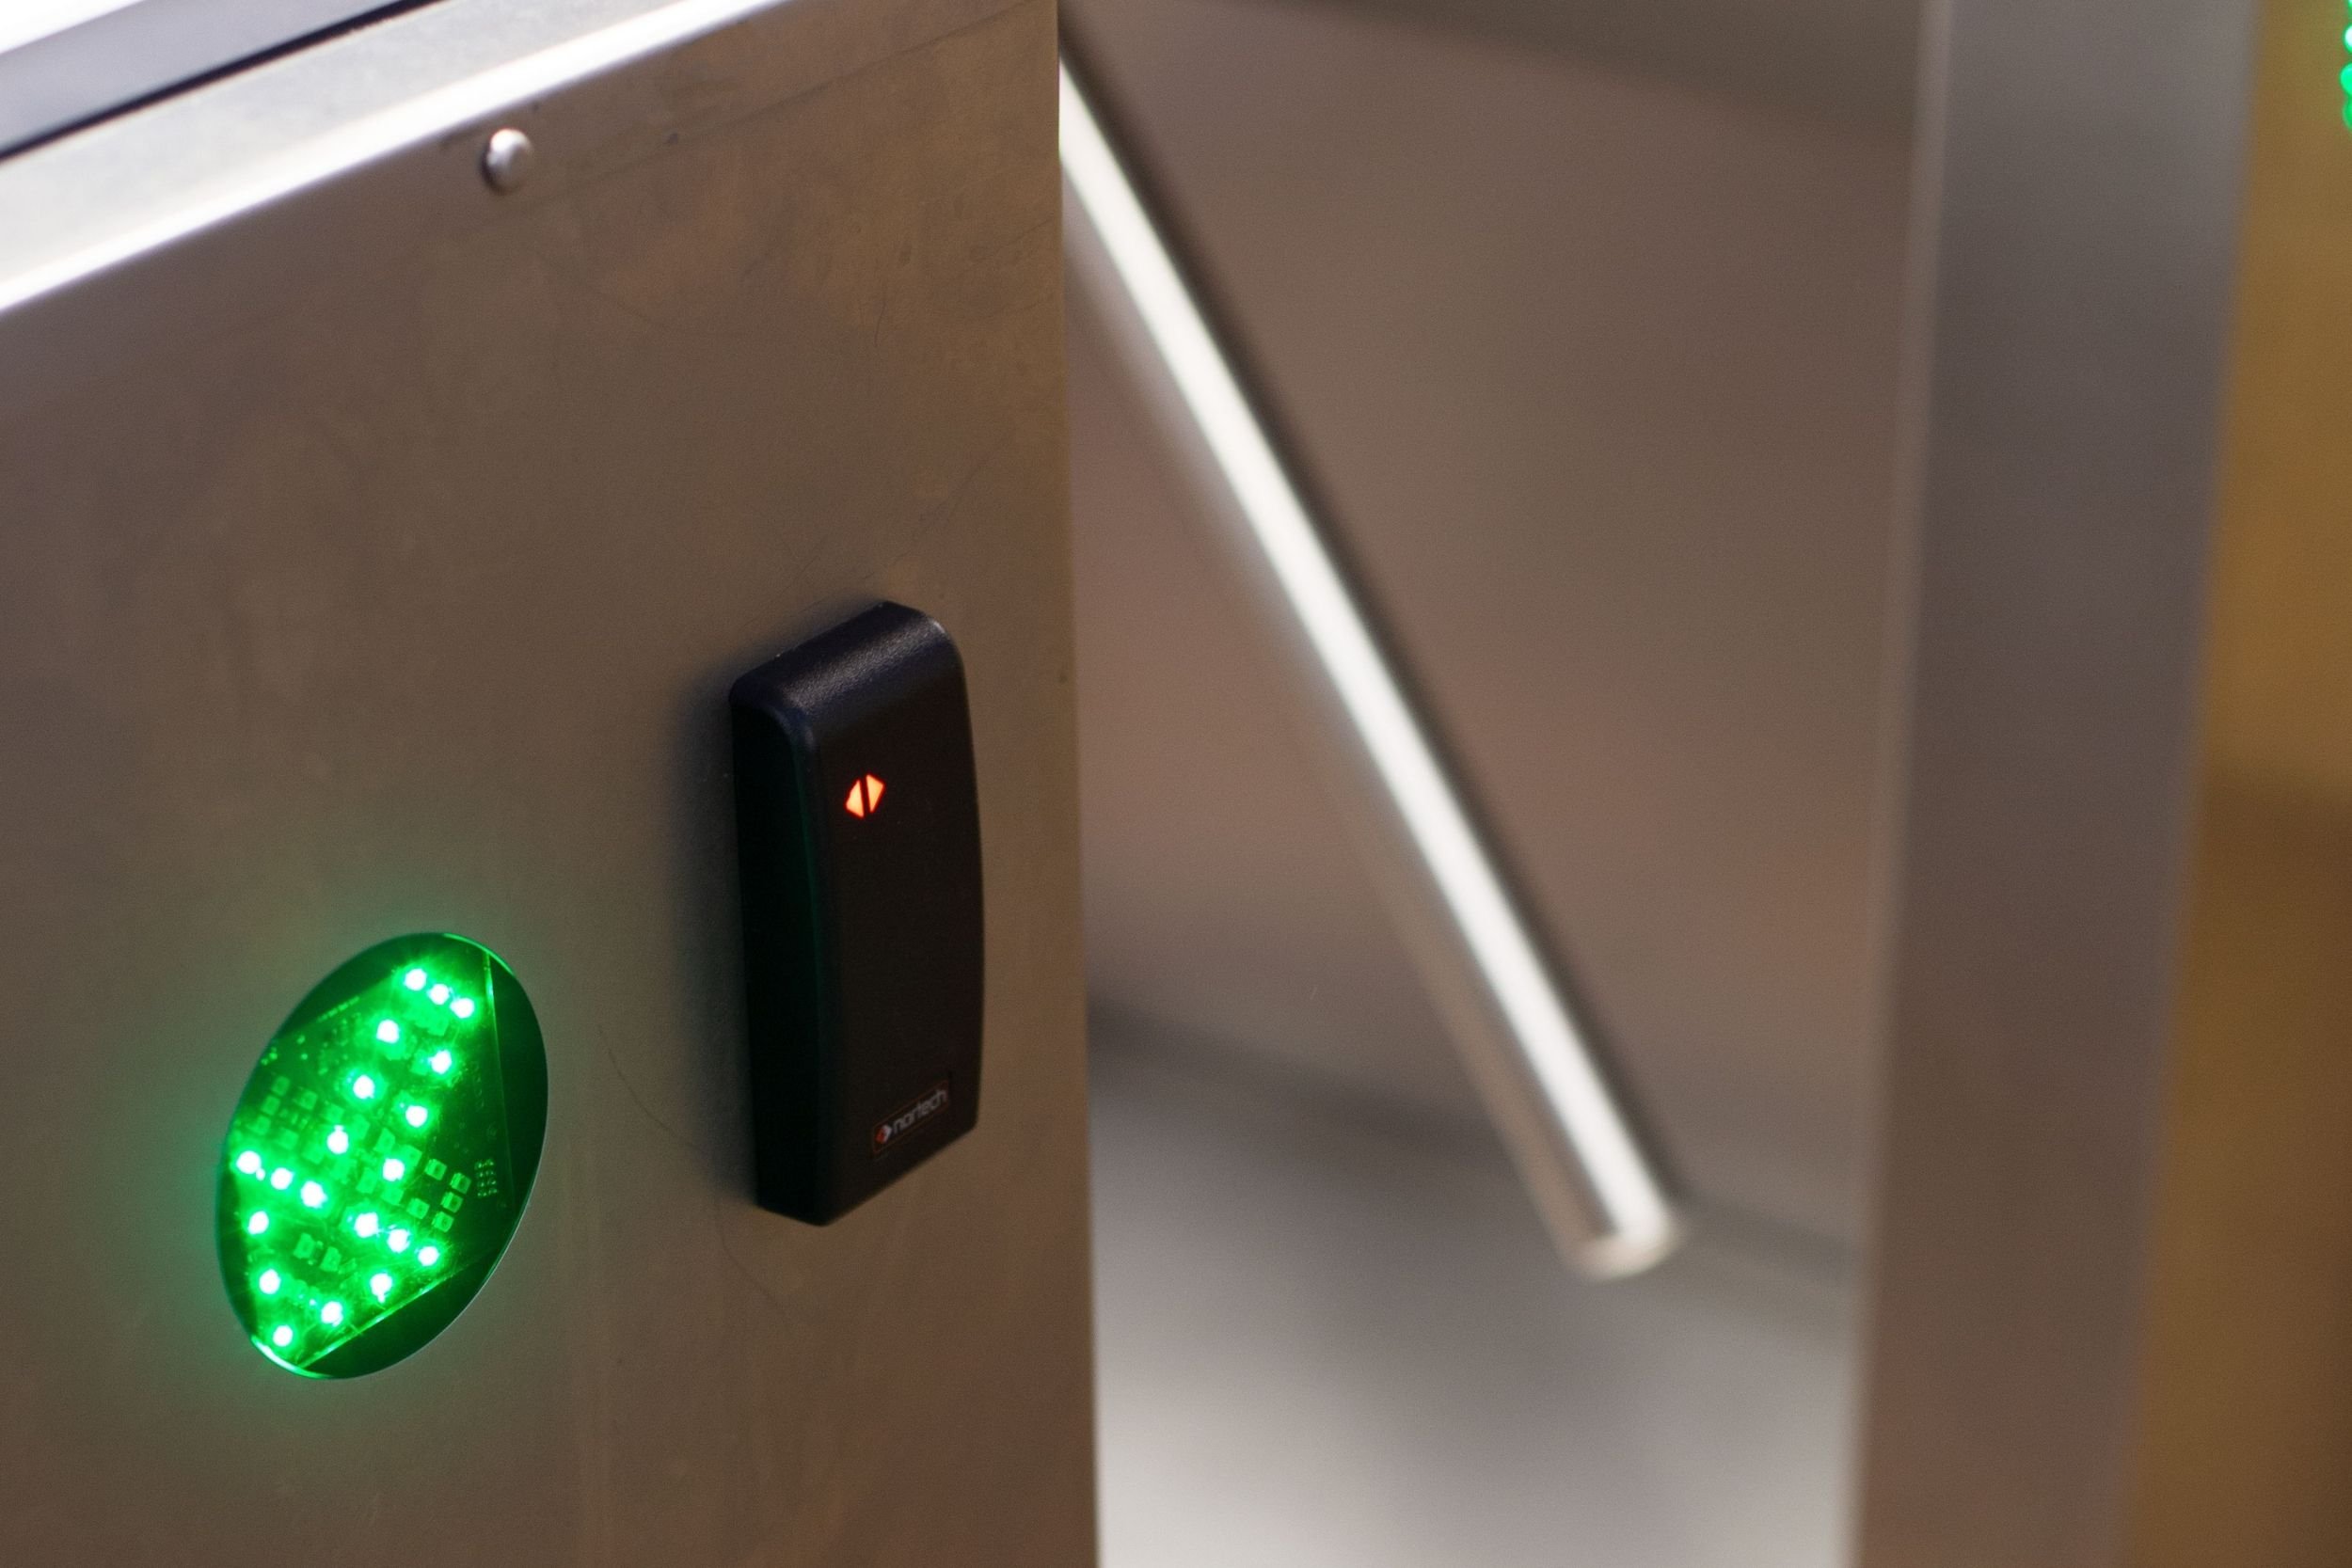 An access control card reader next to a green LED arrow light on a tripod turnstile